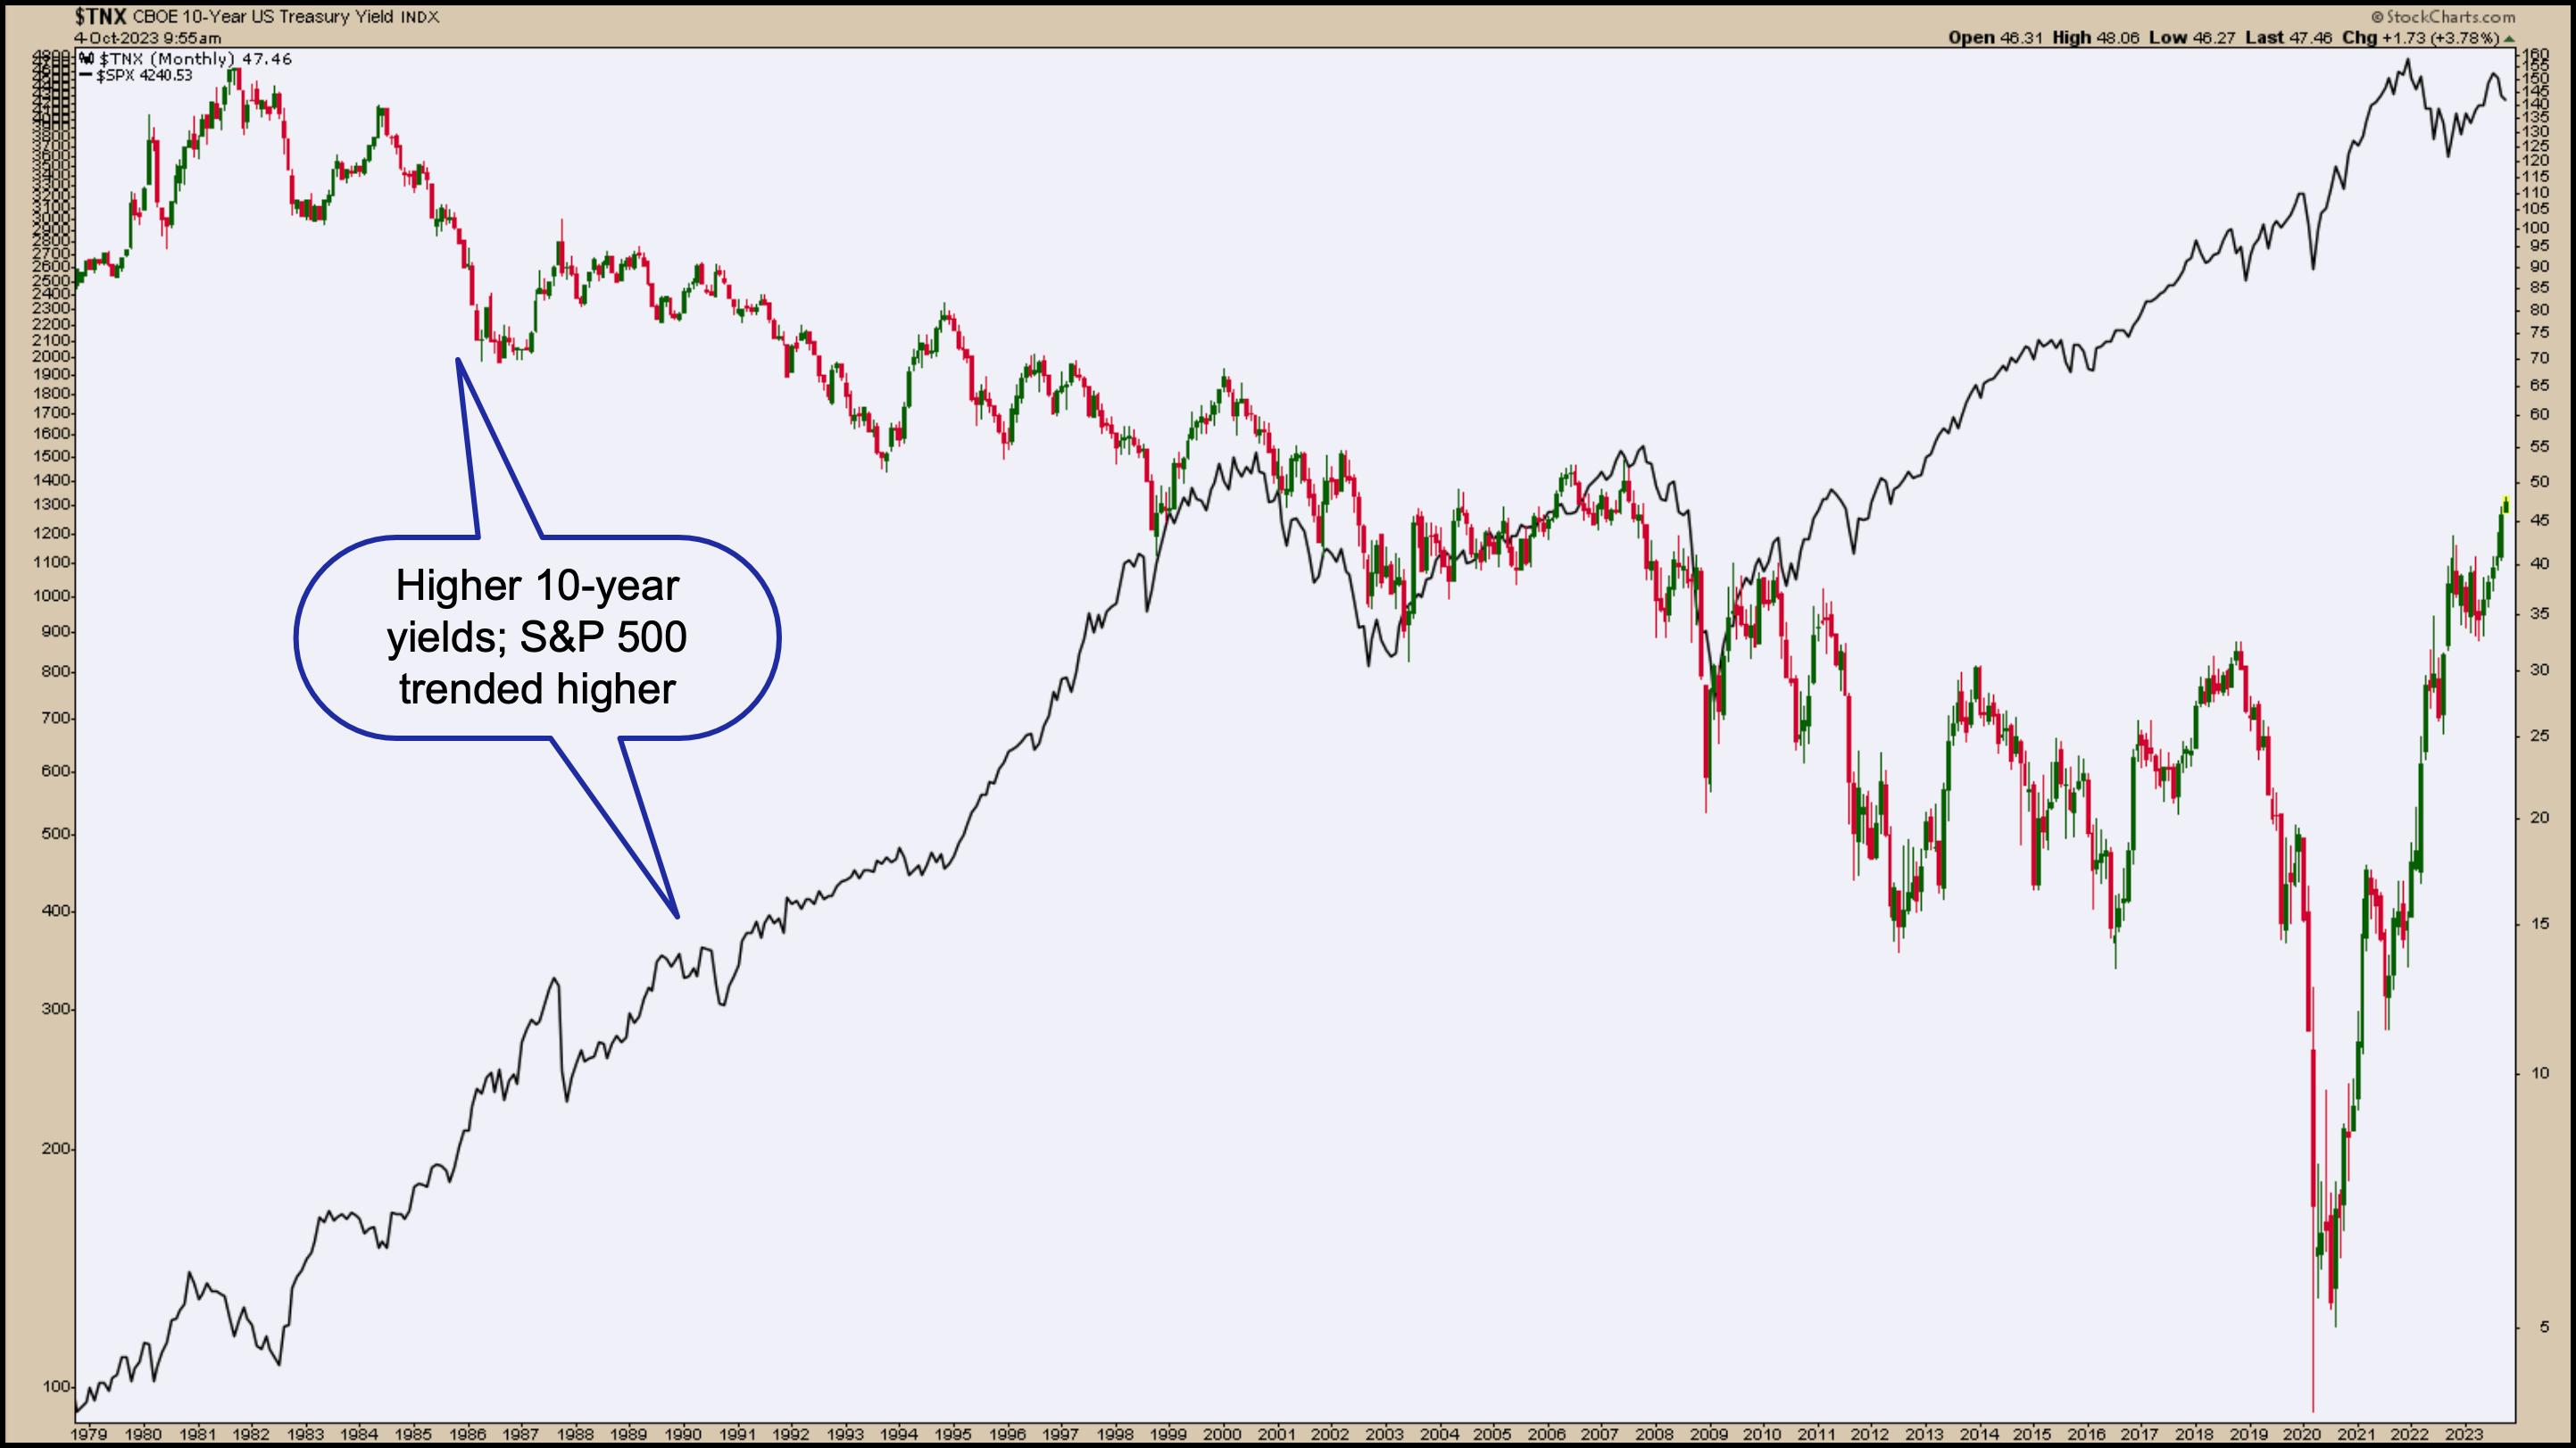 US Stock Market - S&P 500 SPX and TNX